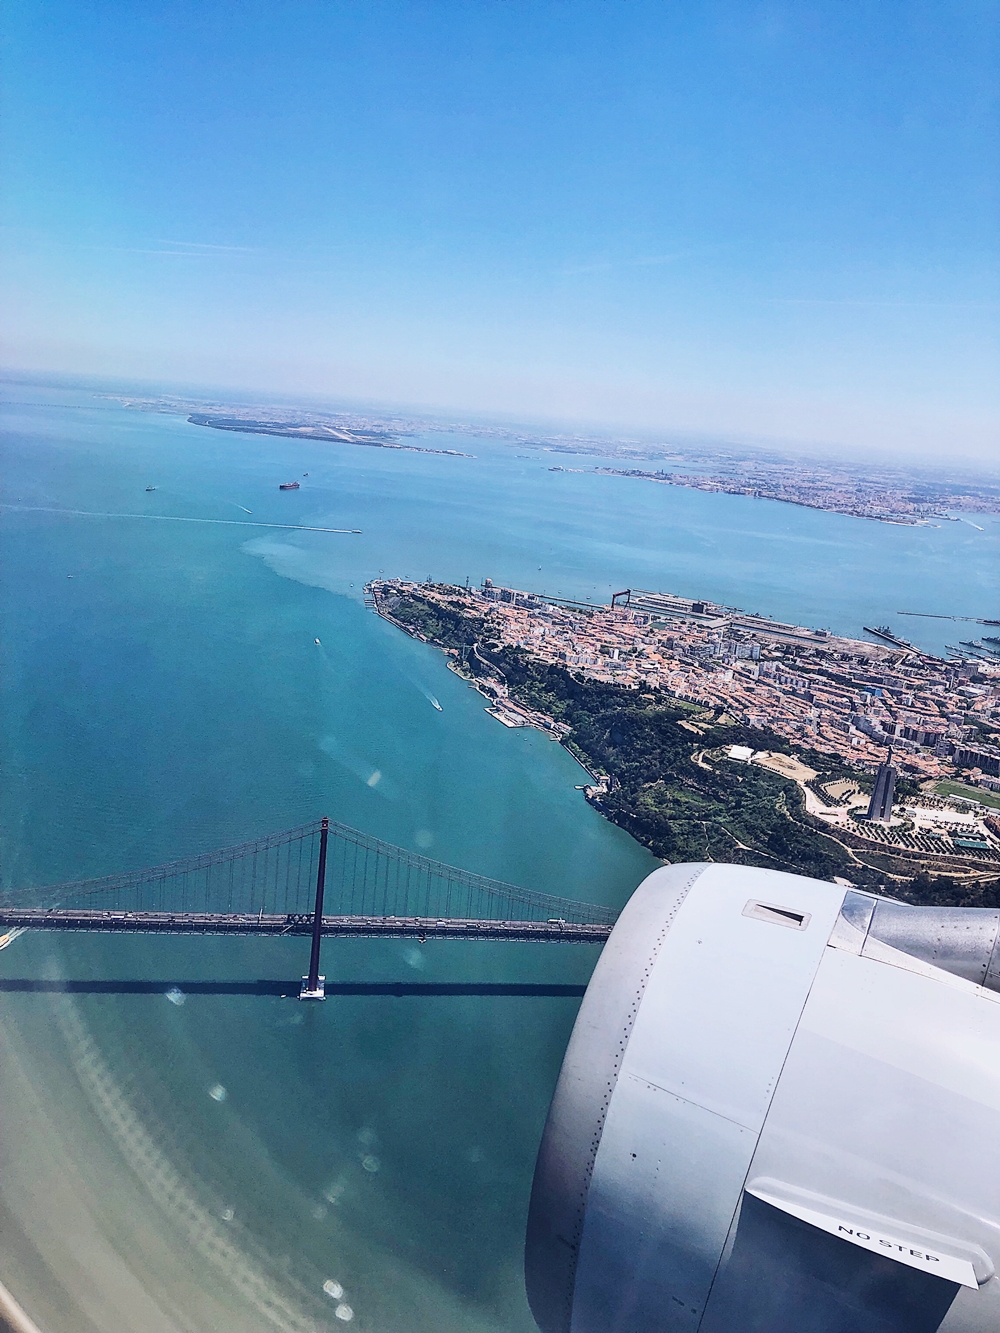 Roadtrip durch Portugal-Portugal-Brücke-Lissabon-Flugzeug,tejo